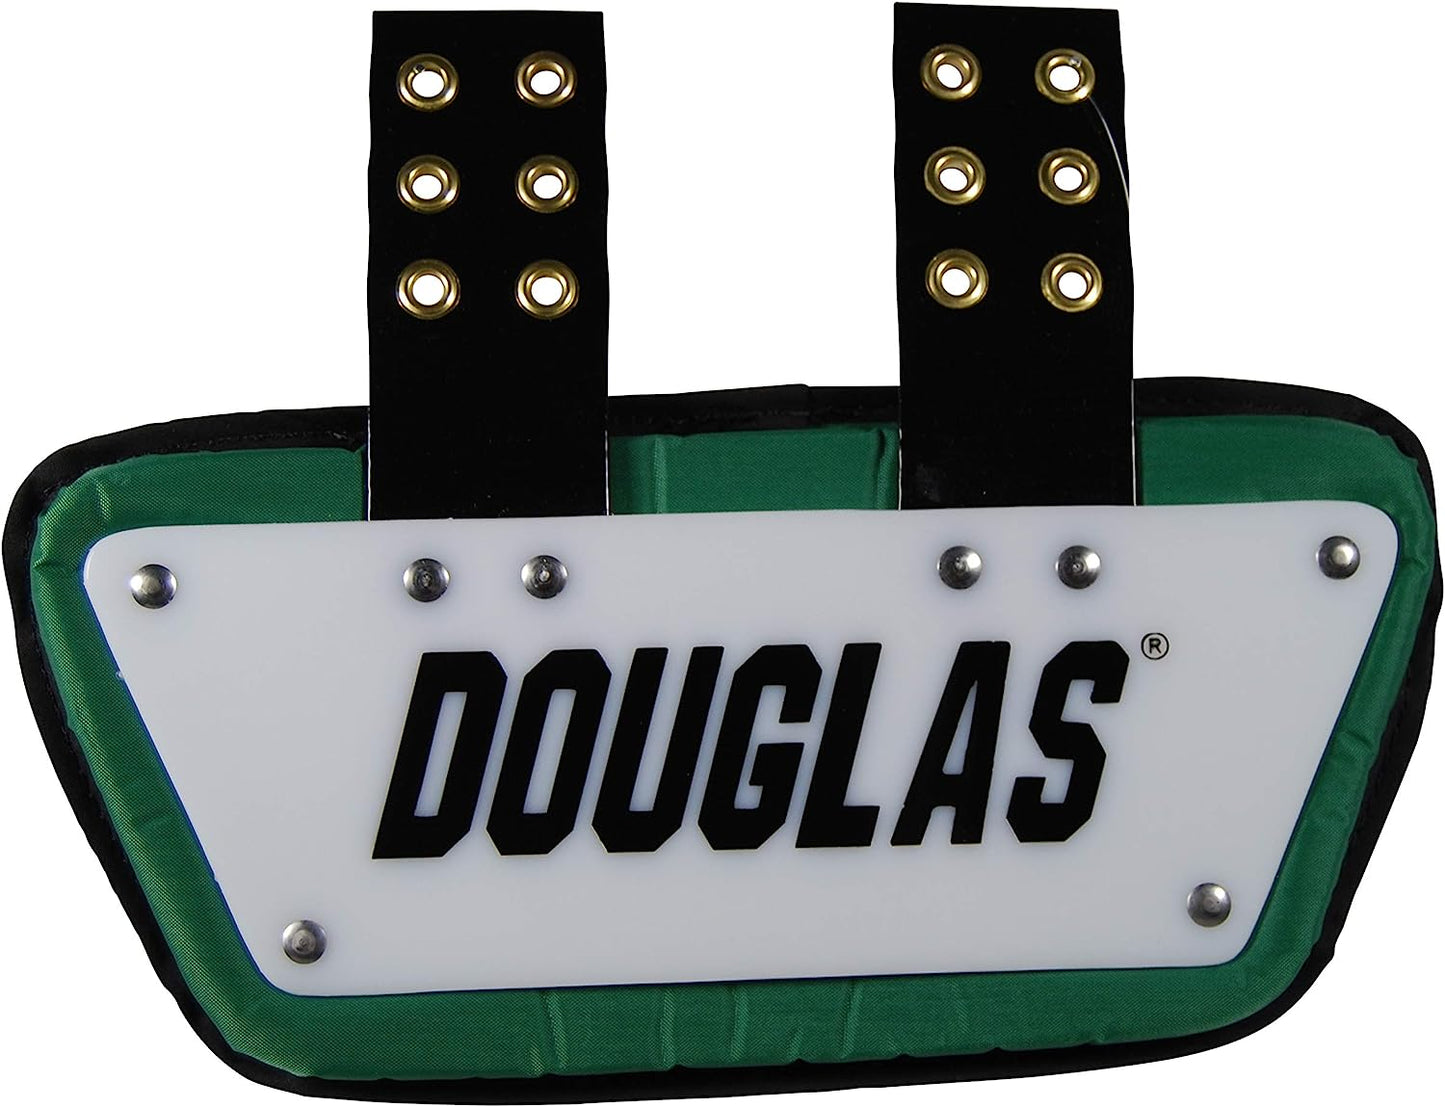 Douglas Removable 4 inch Back Plate